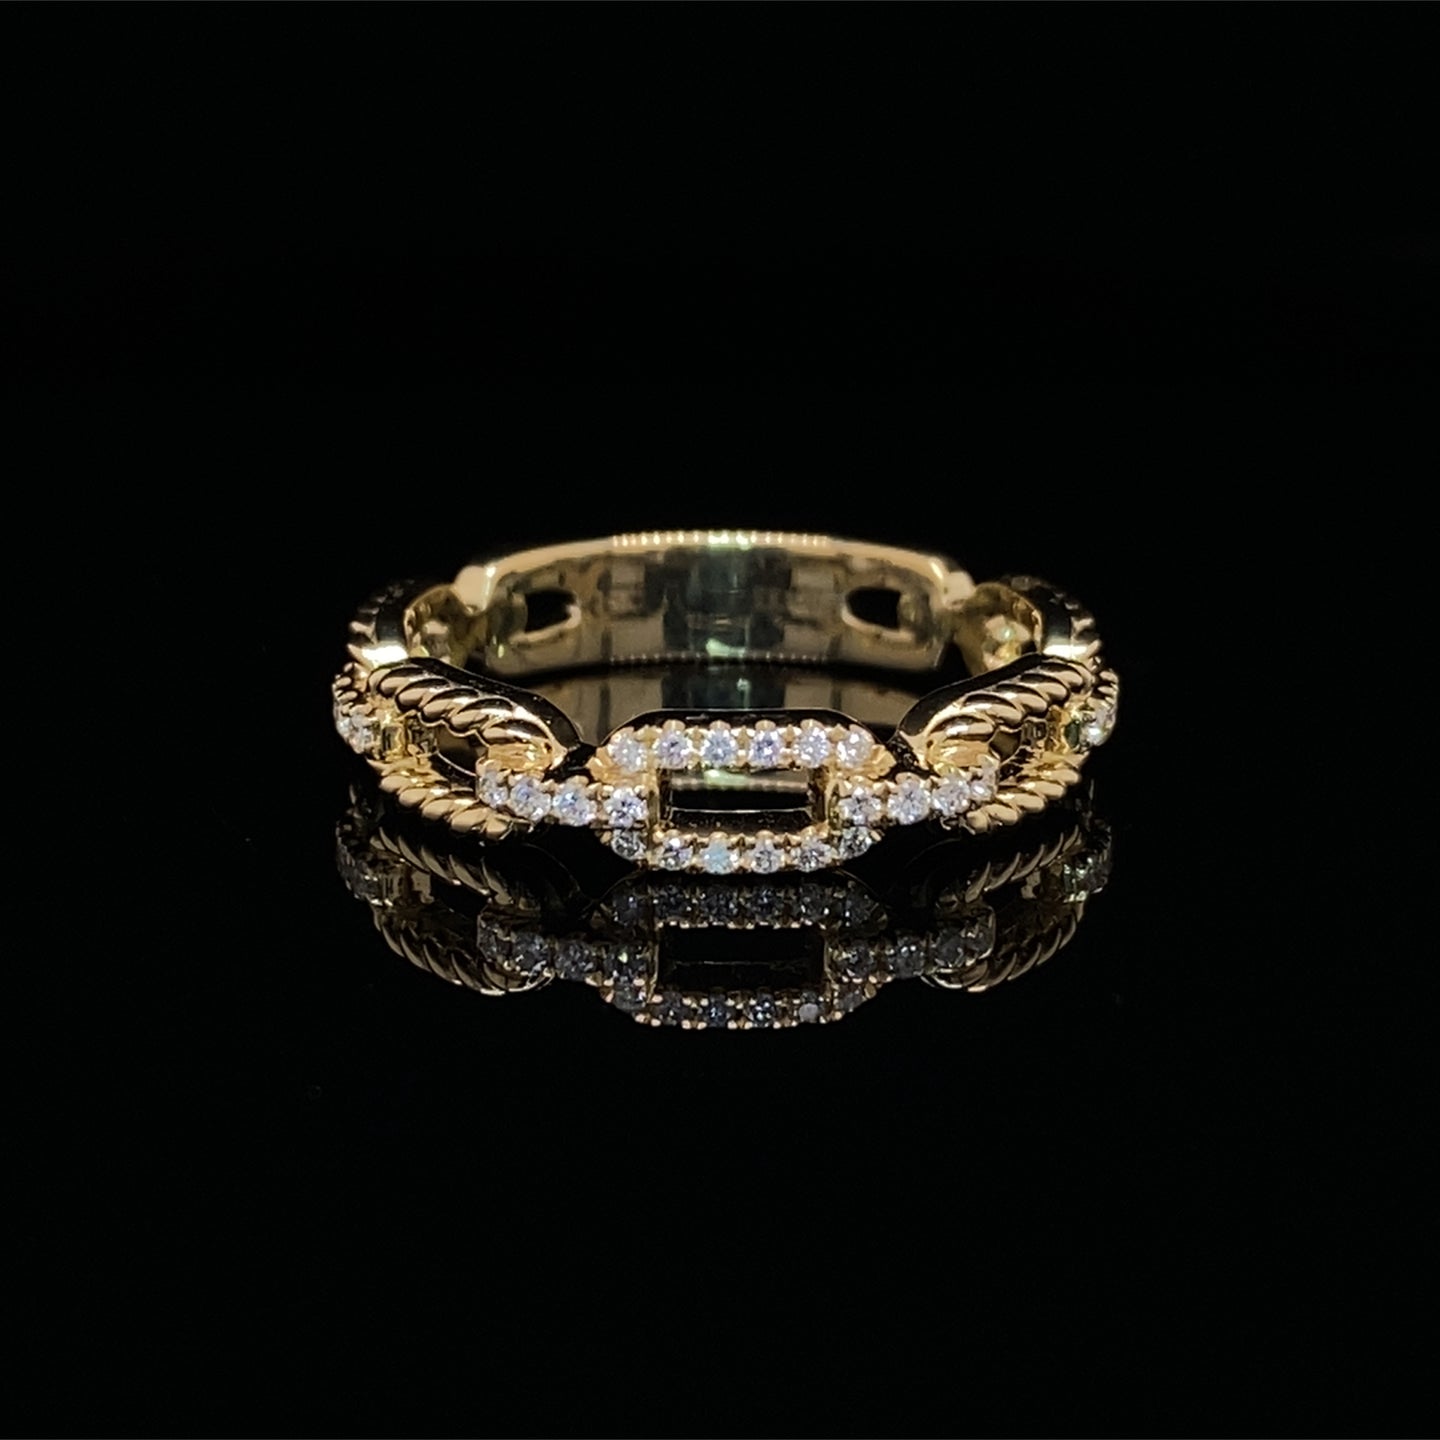 Link Diamond Ring in 14K Yellow Gold